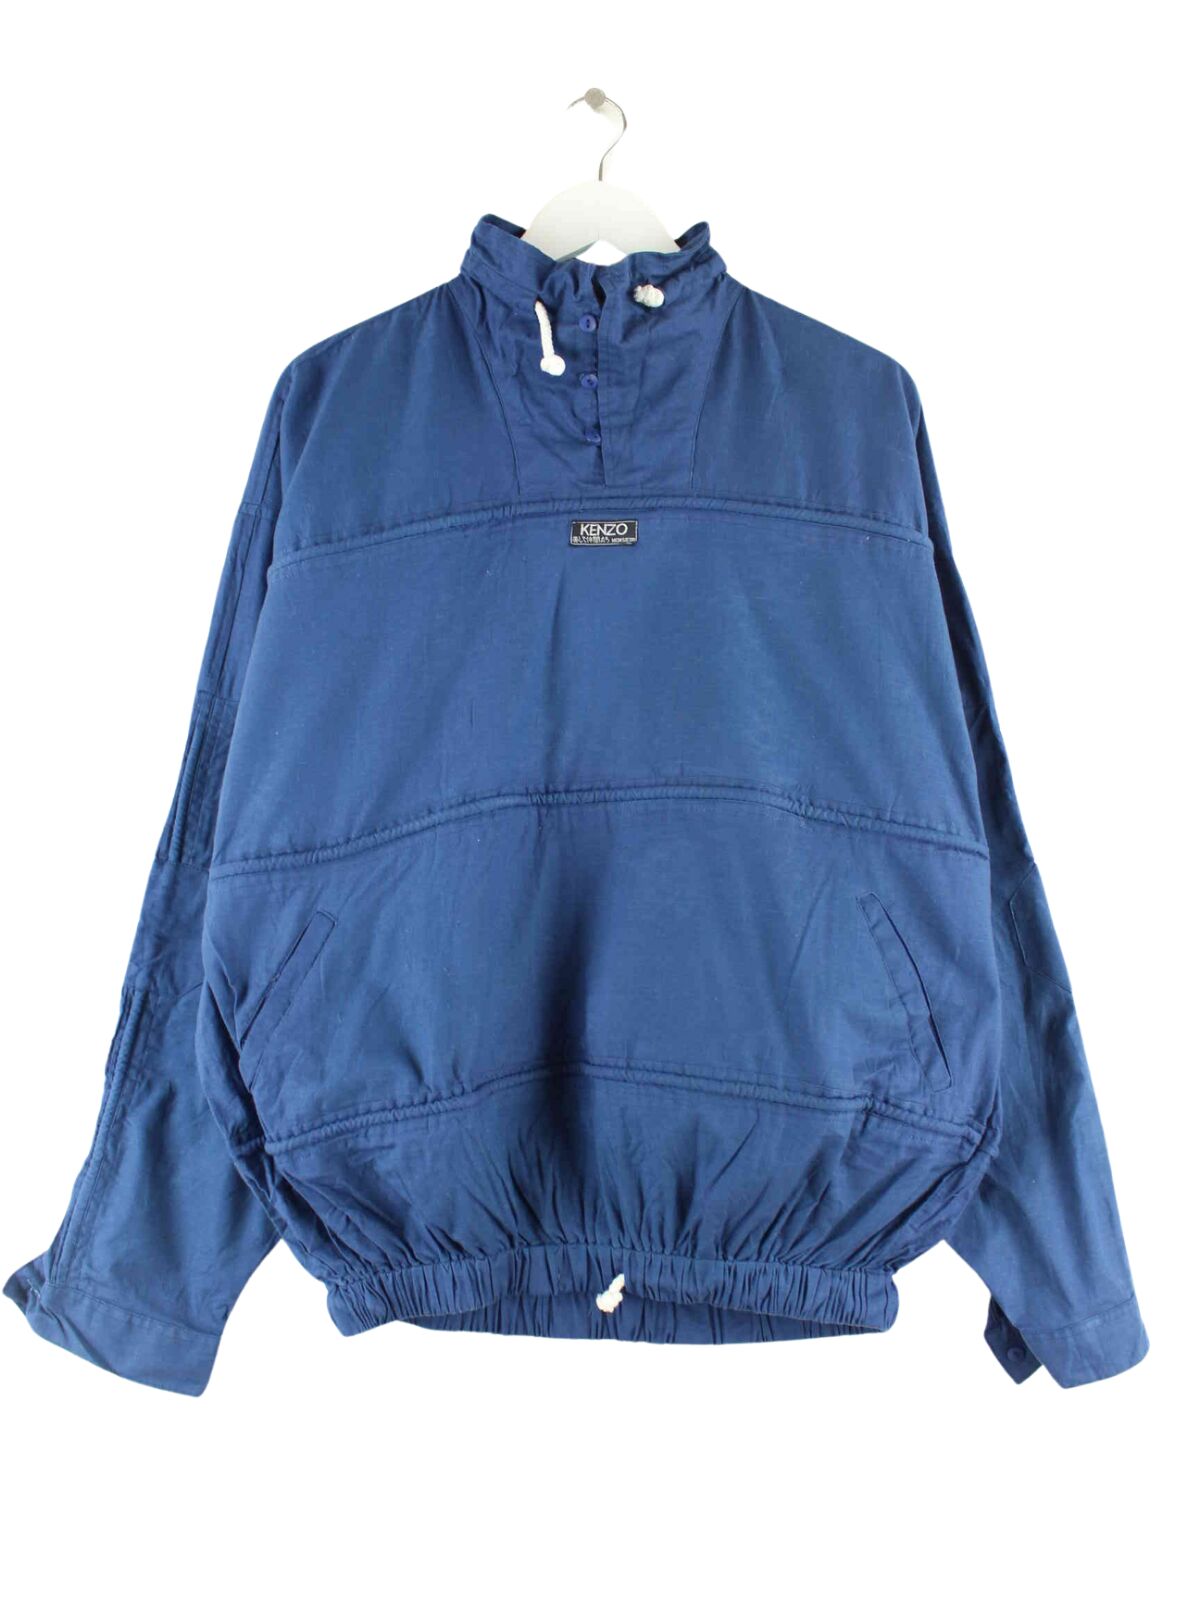 Kenzo 90s Vintage Jacke Blau M (front image)